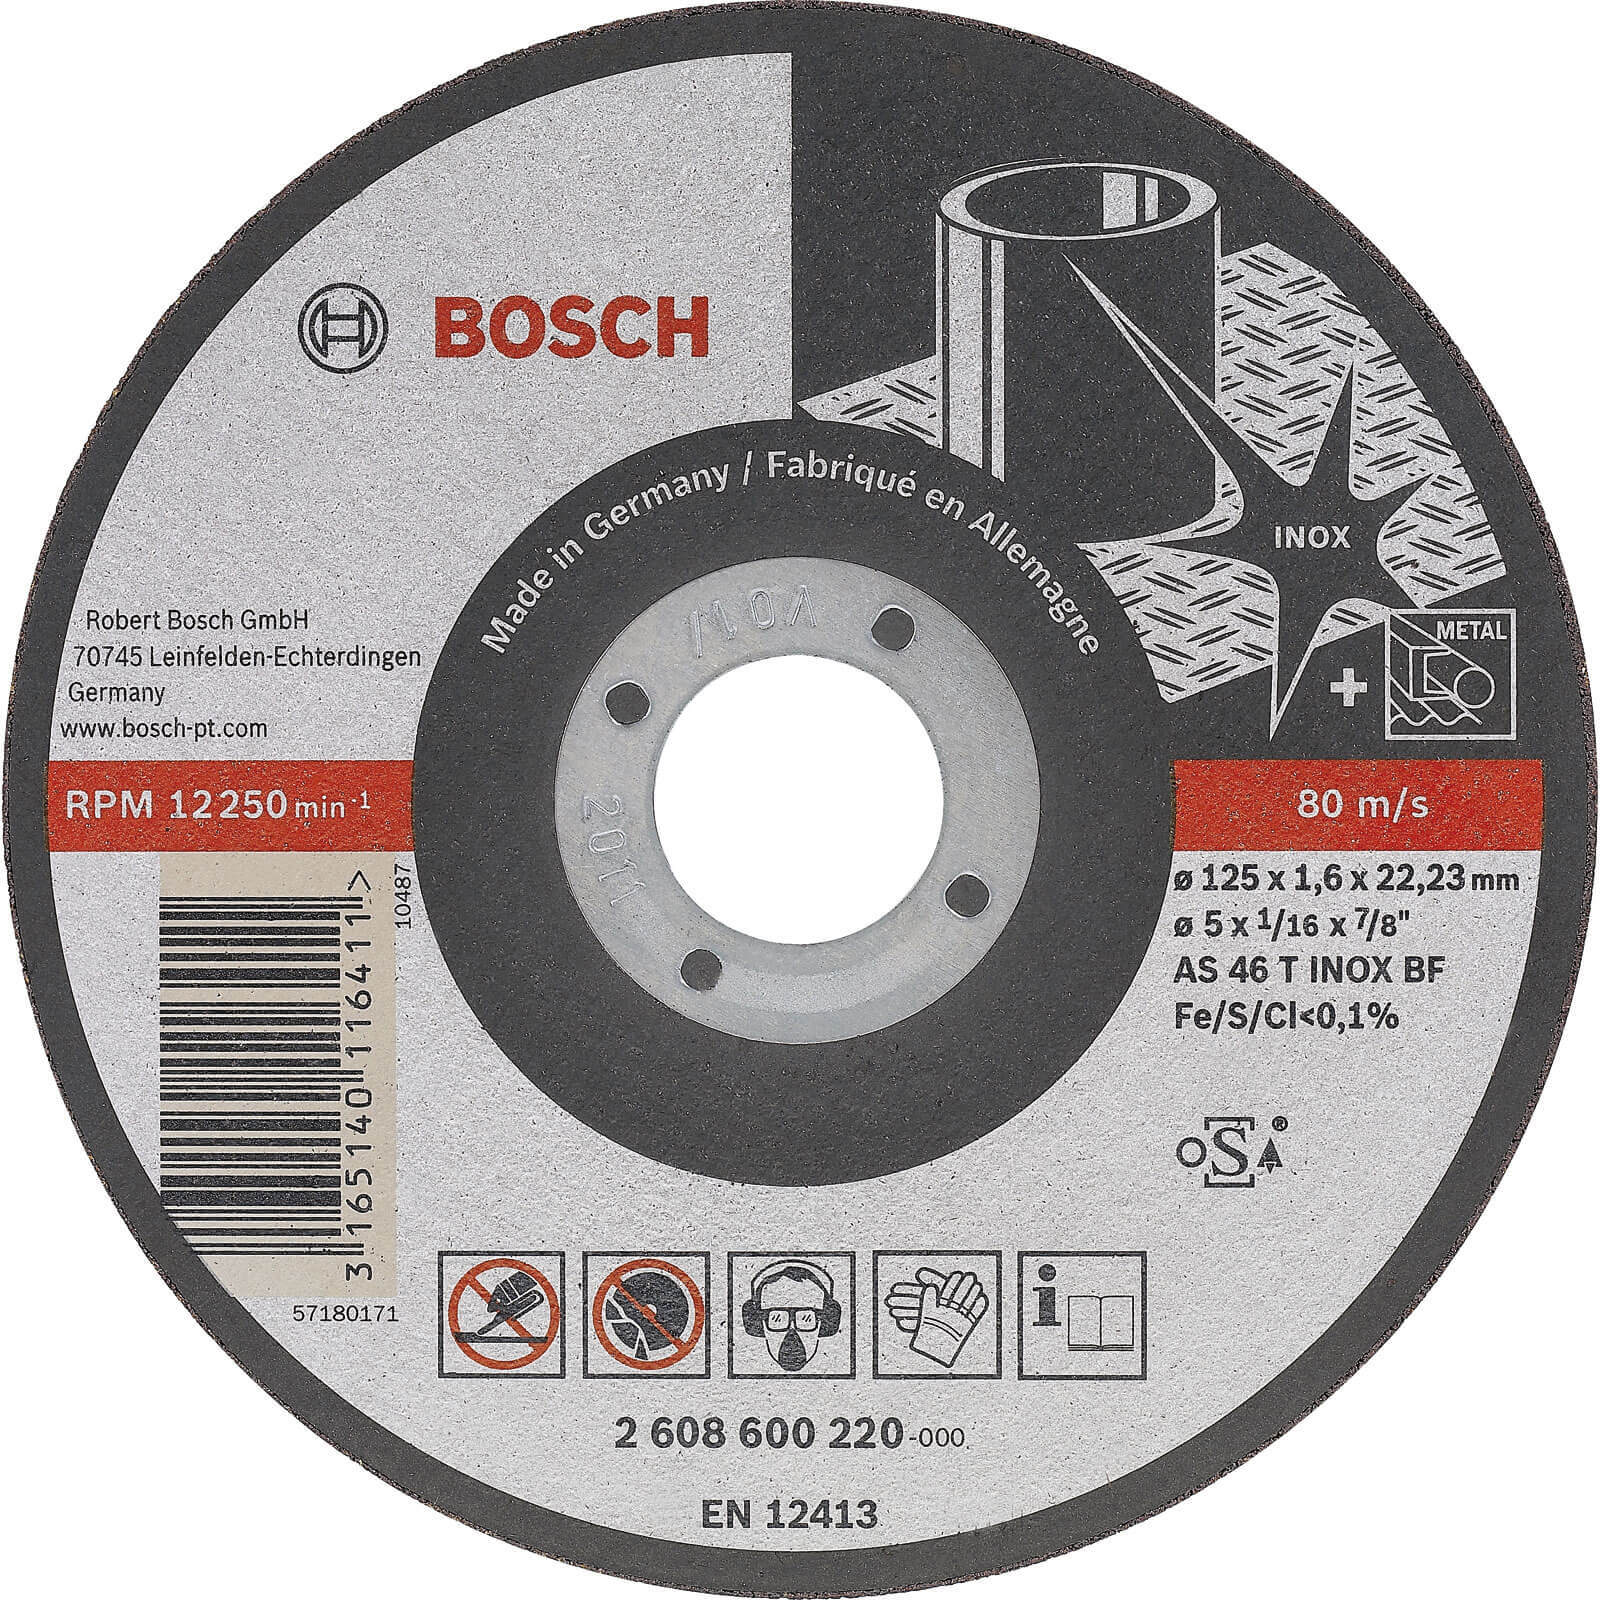 Image of Bosch Rapido Best Inox Cutting Disc 115mm 1mm 22mm